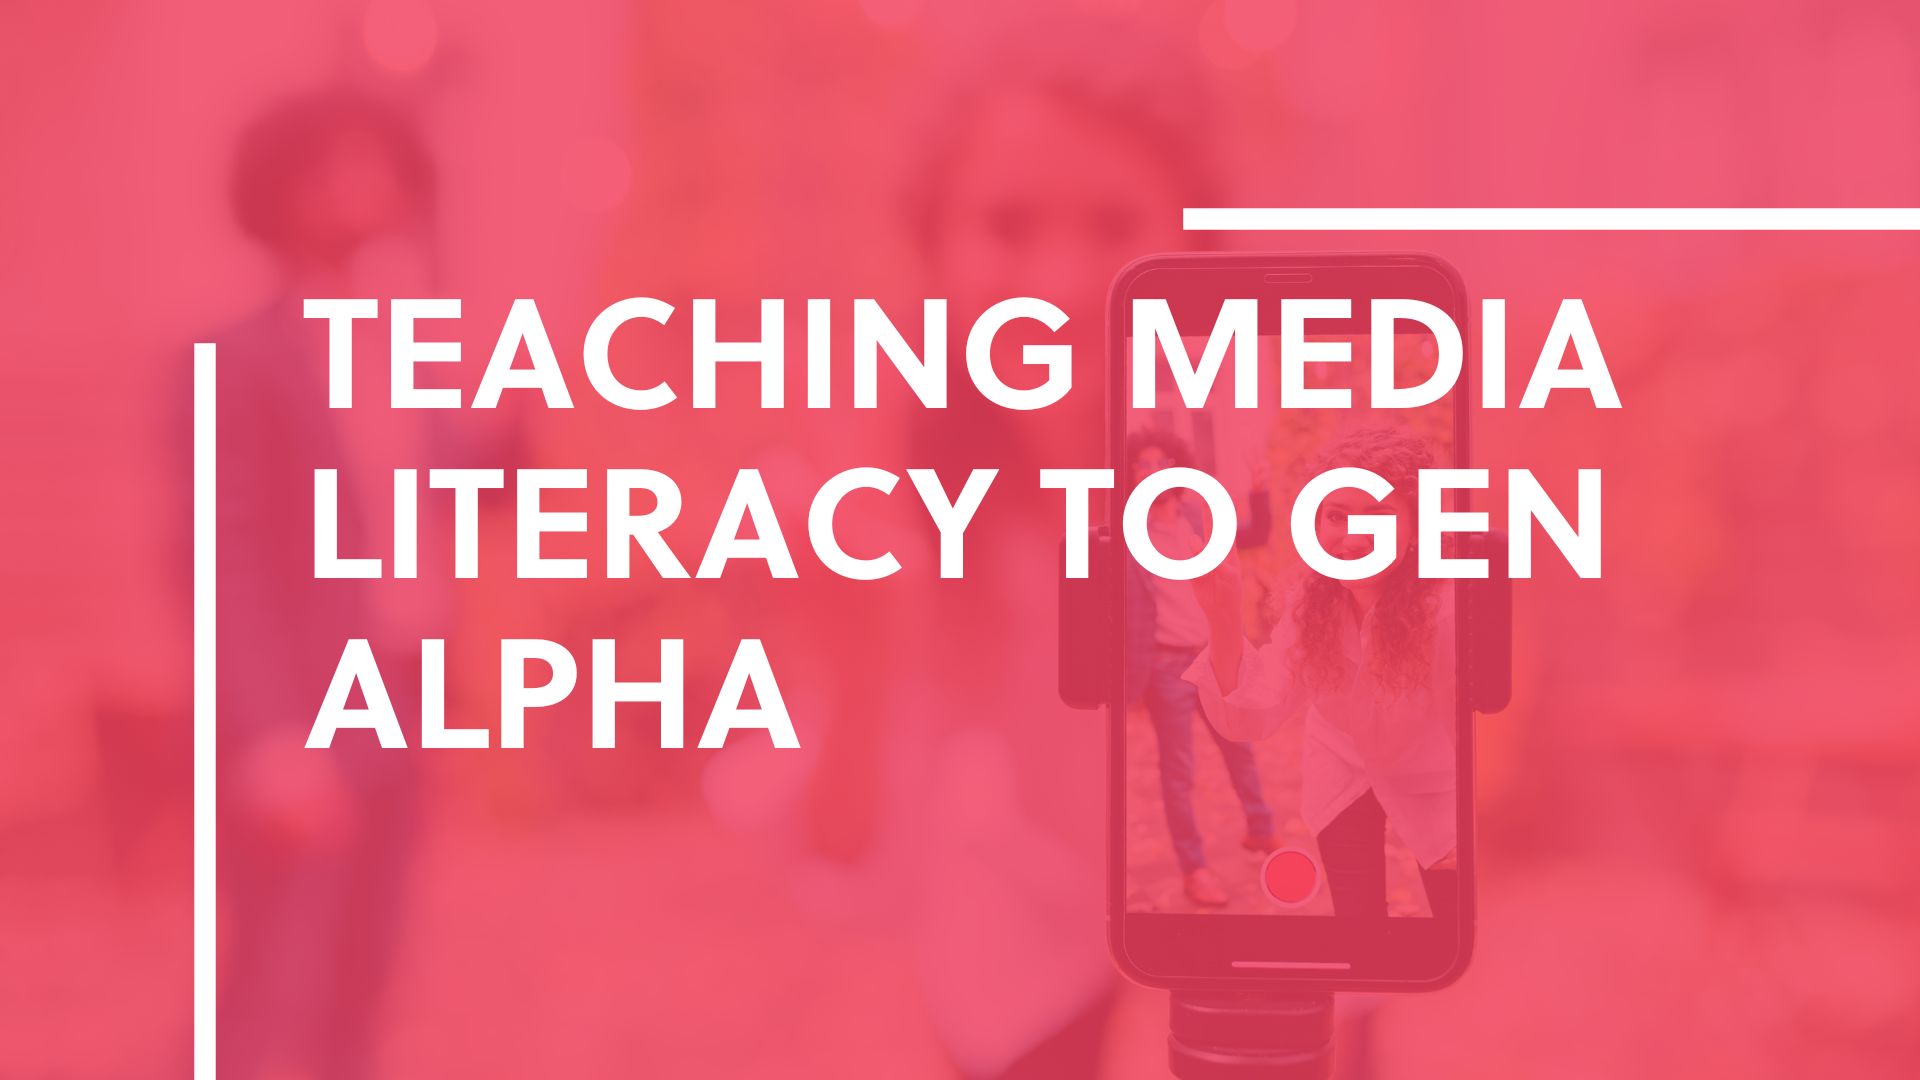 Teaching media literacy to gen alpha header image in pink